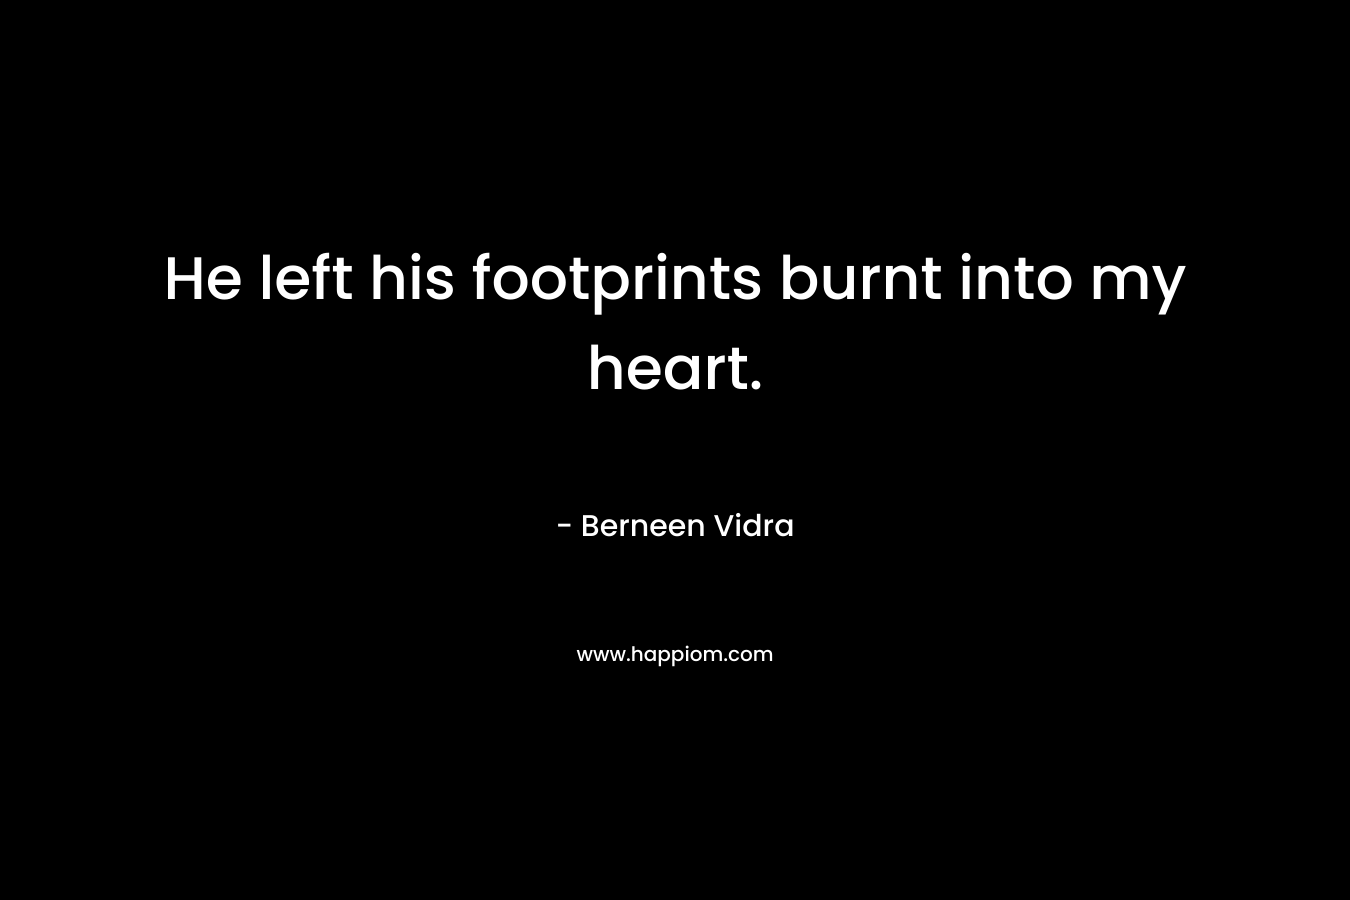 He left his footprints burnt into my heart.